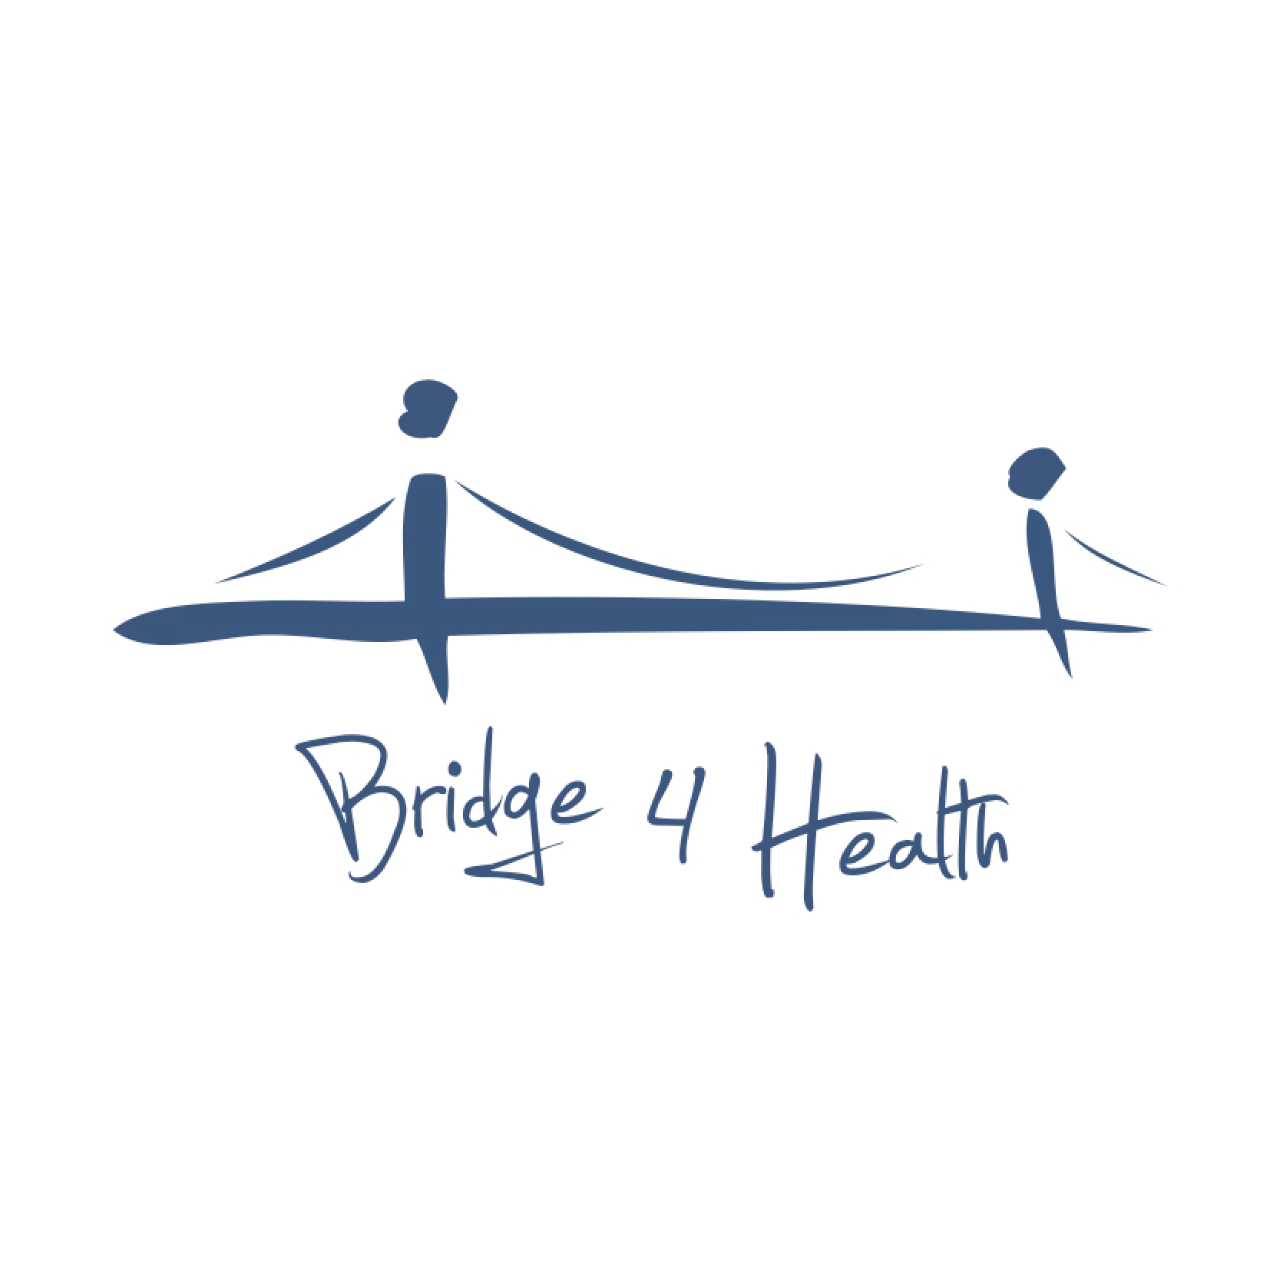 Bridge for Health